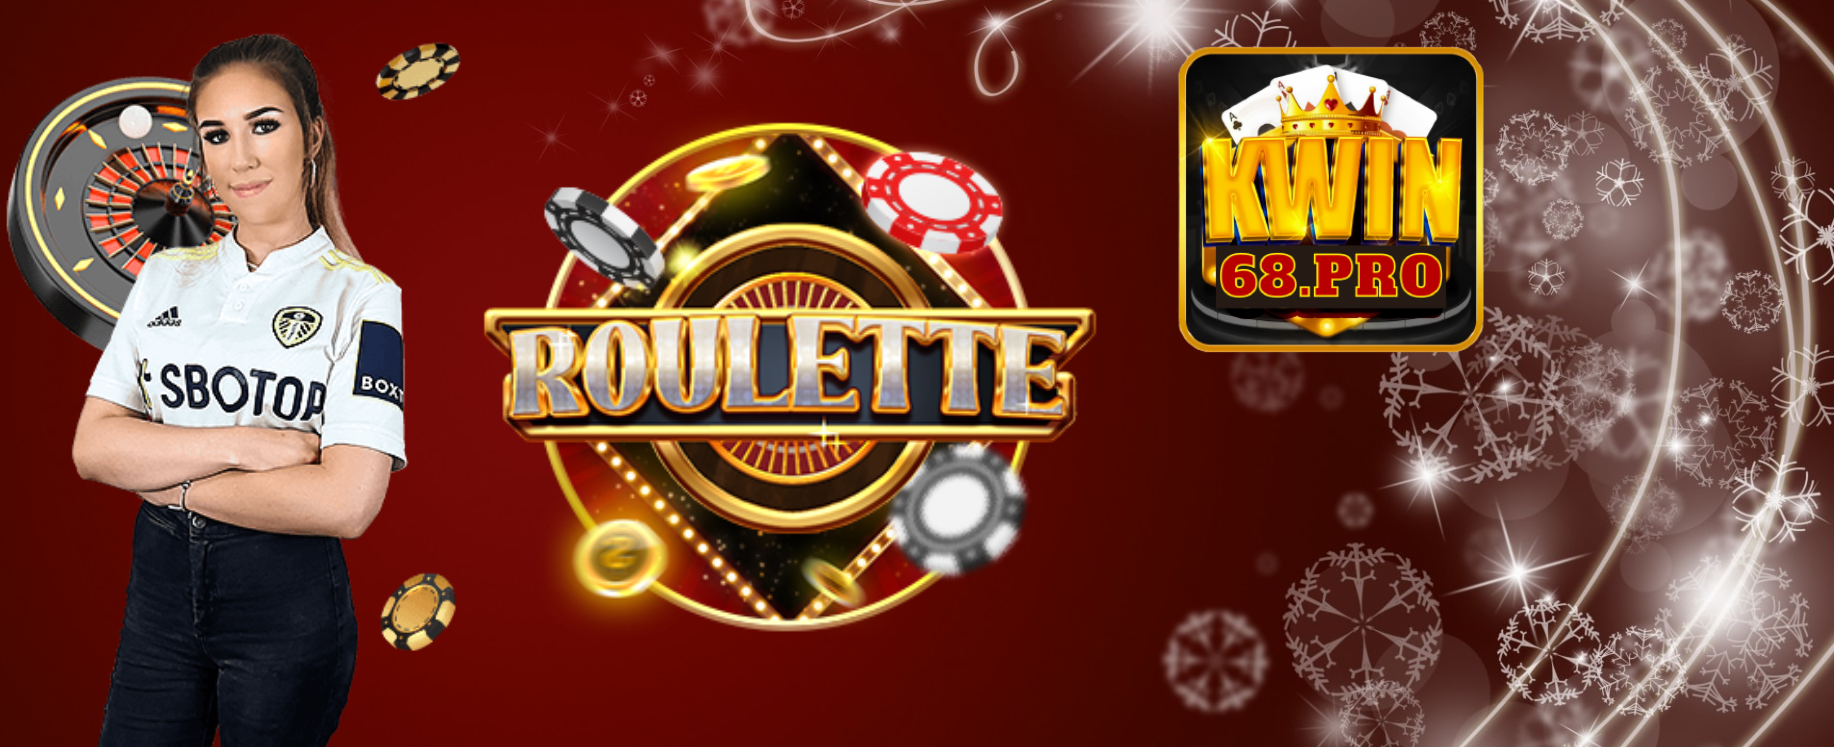 Game cá cược roulette kwin68